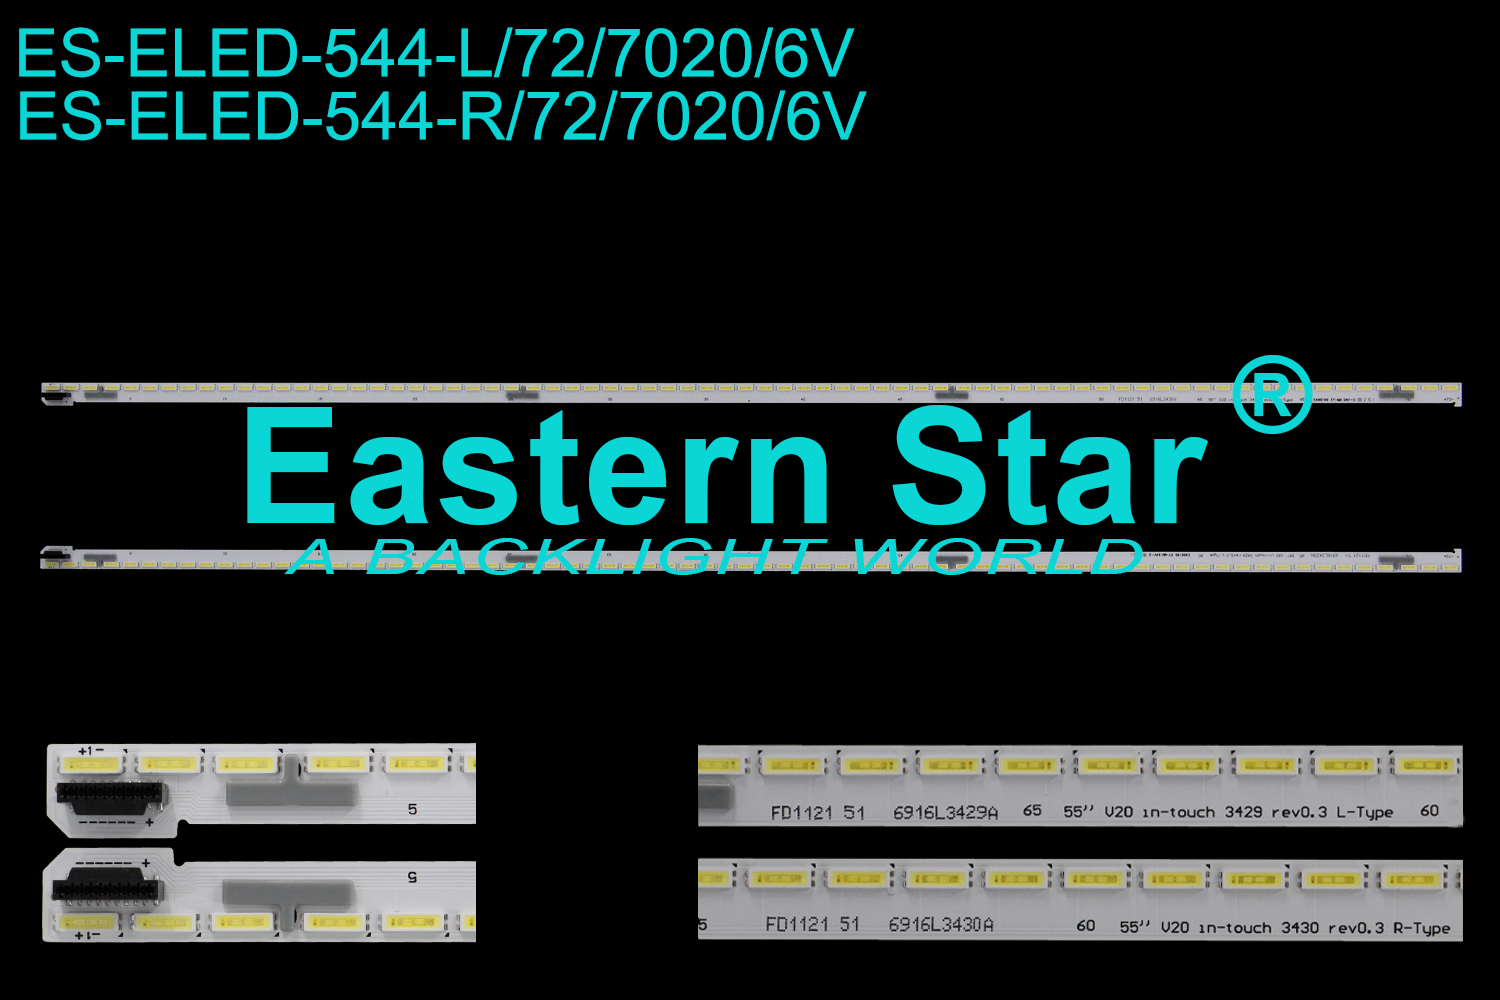 ES-ELED-544 ELED/EDGE TV backlight use for 55'' LG 6919L-3429A 55 V20 in-touch 3429 rev0.3 L-Type 6919L-3430A 55 V20 in-touch 3430 rev0.3 R-Type  LED STRIPS(2)